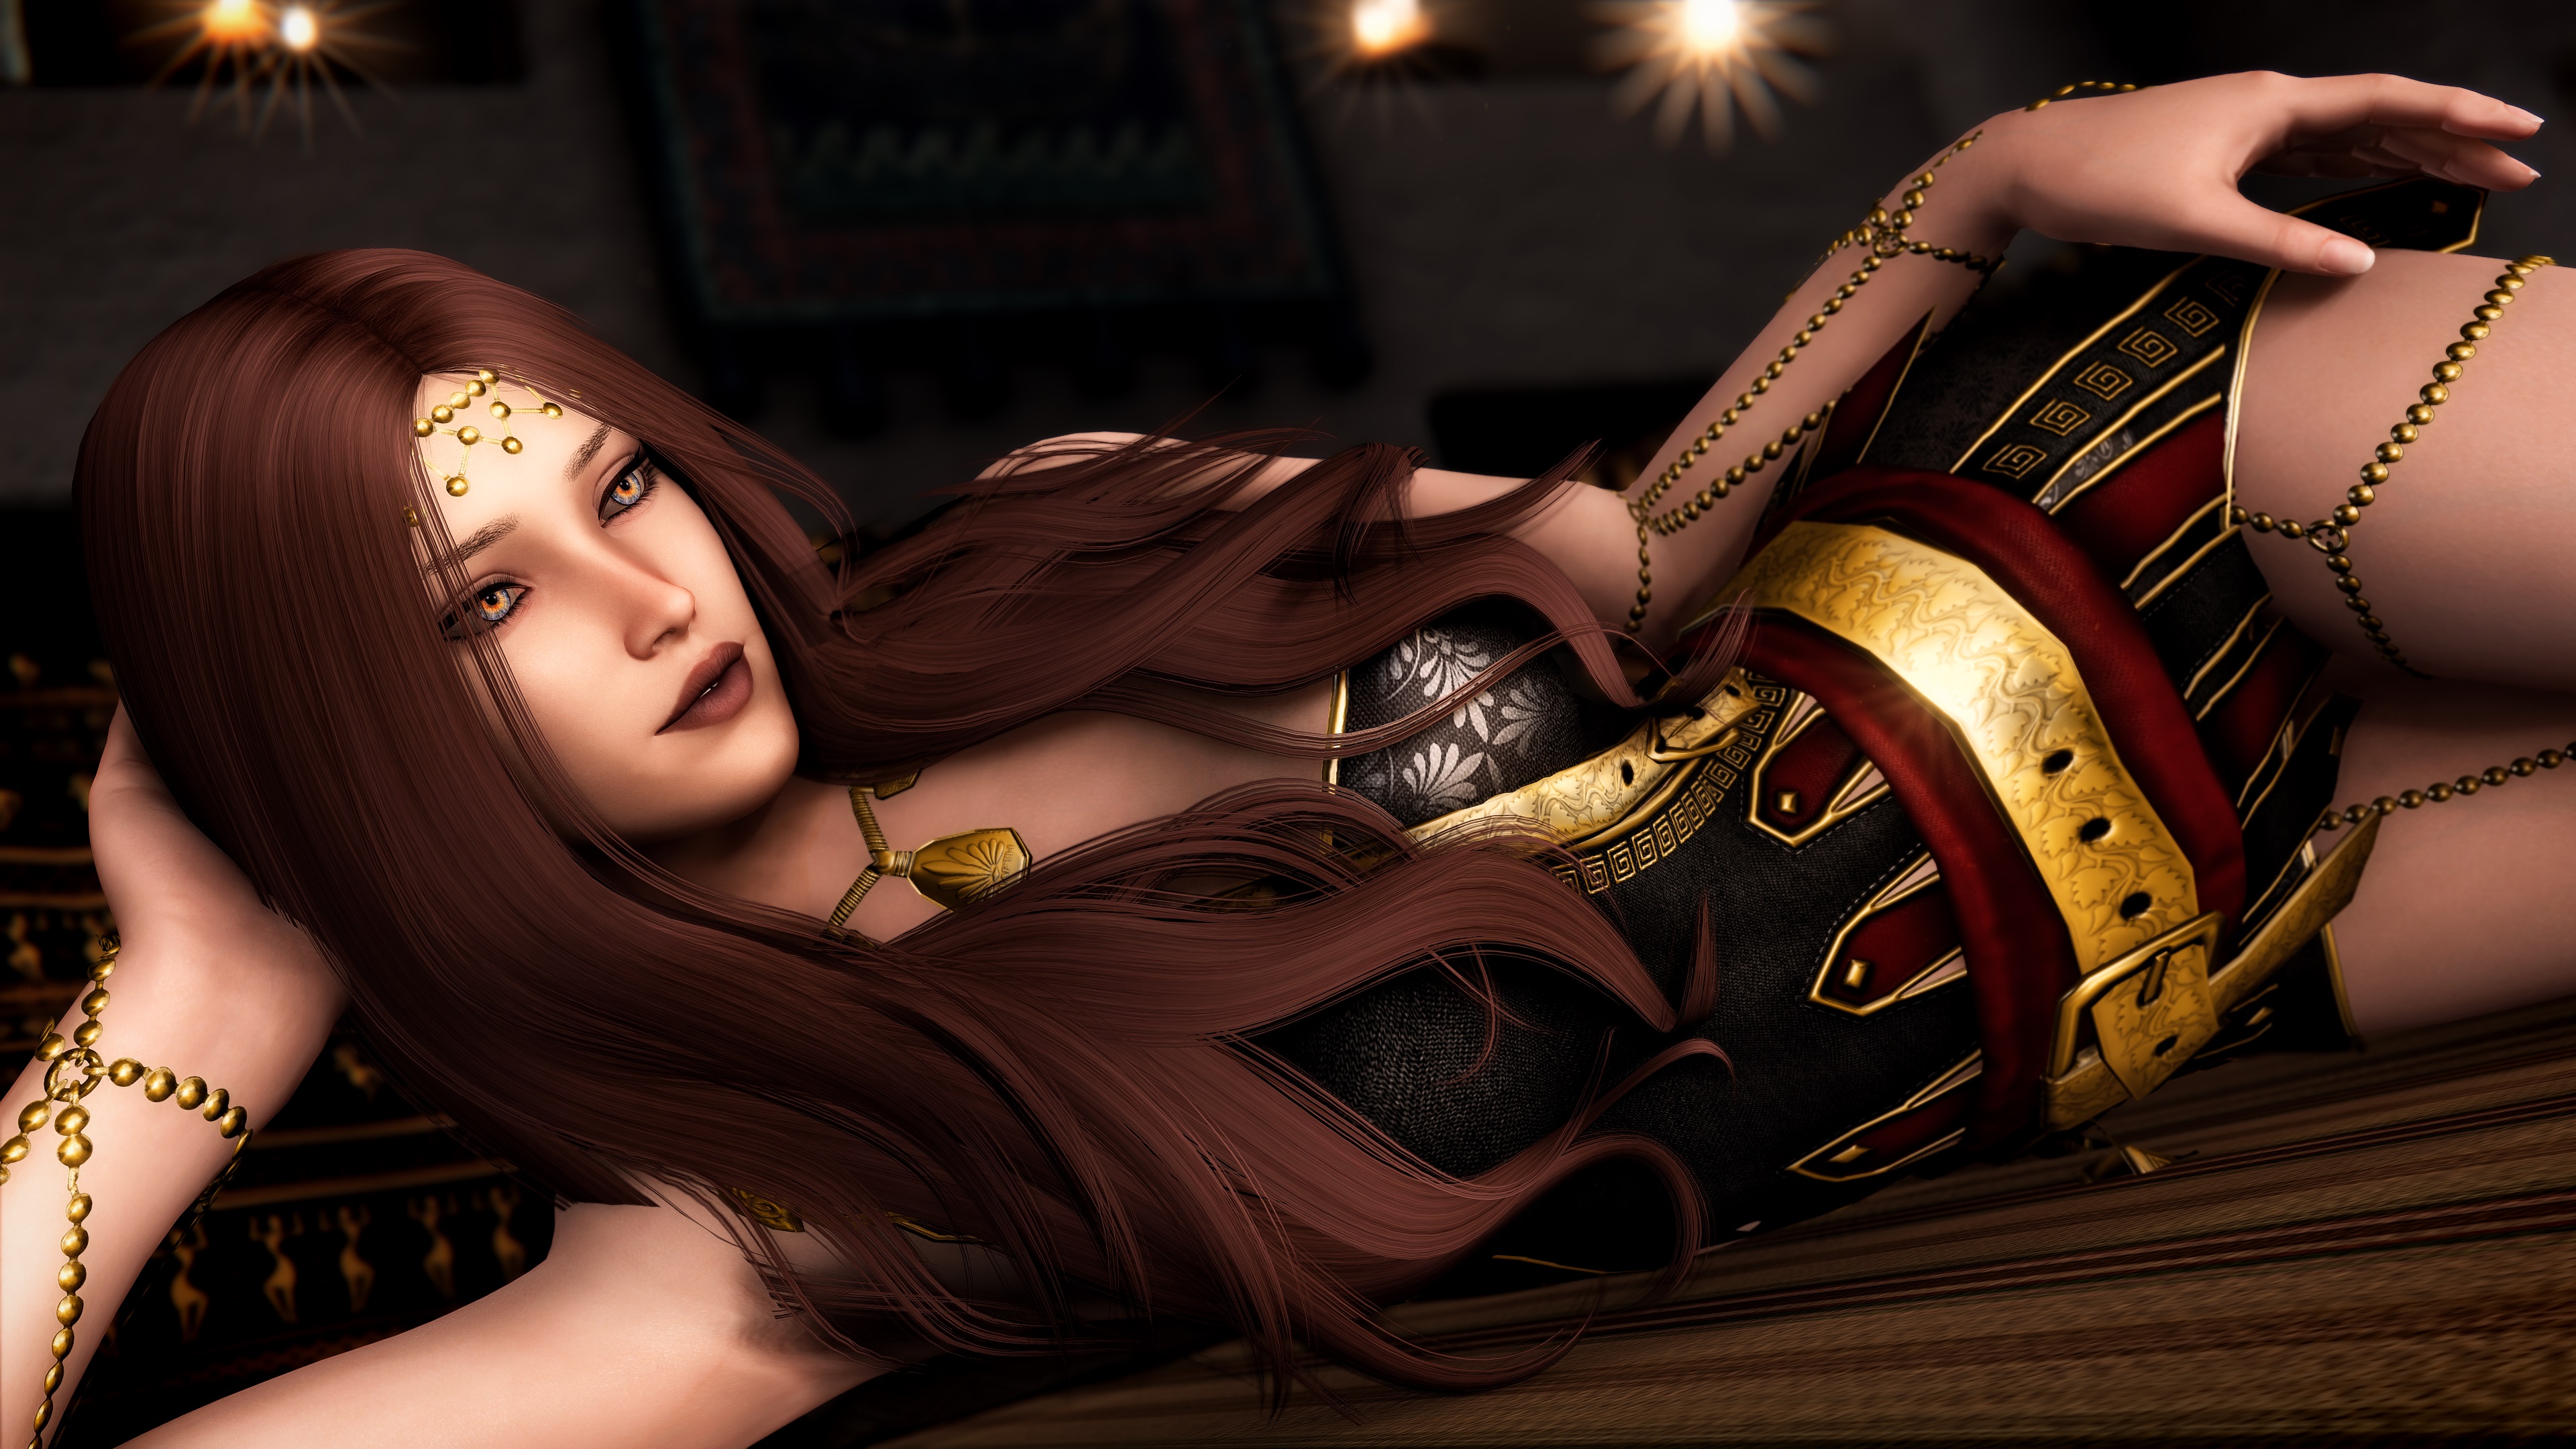 General 3840x2160 Skyrim Remastered The Elder Scrolls V: Skyrim video games PC gaming women long hair video game girls fantasy girl RPG